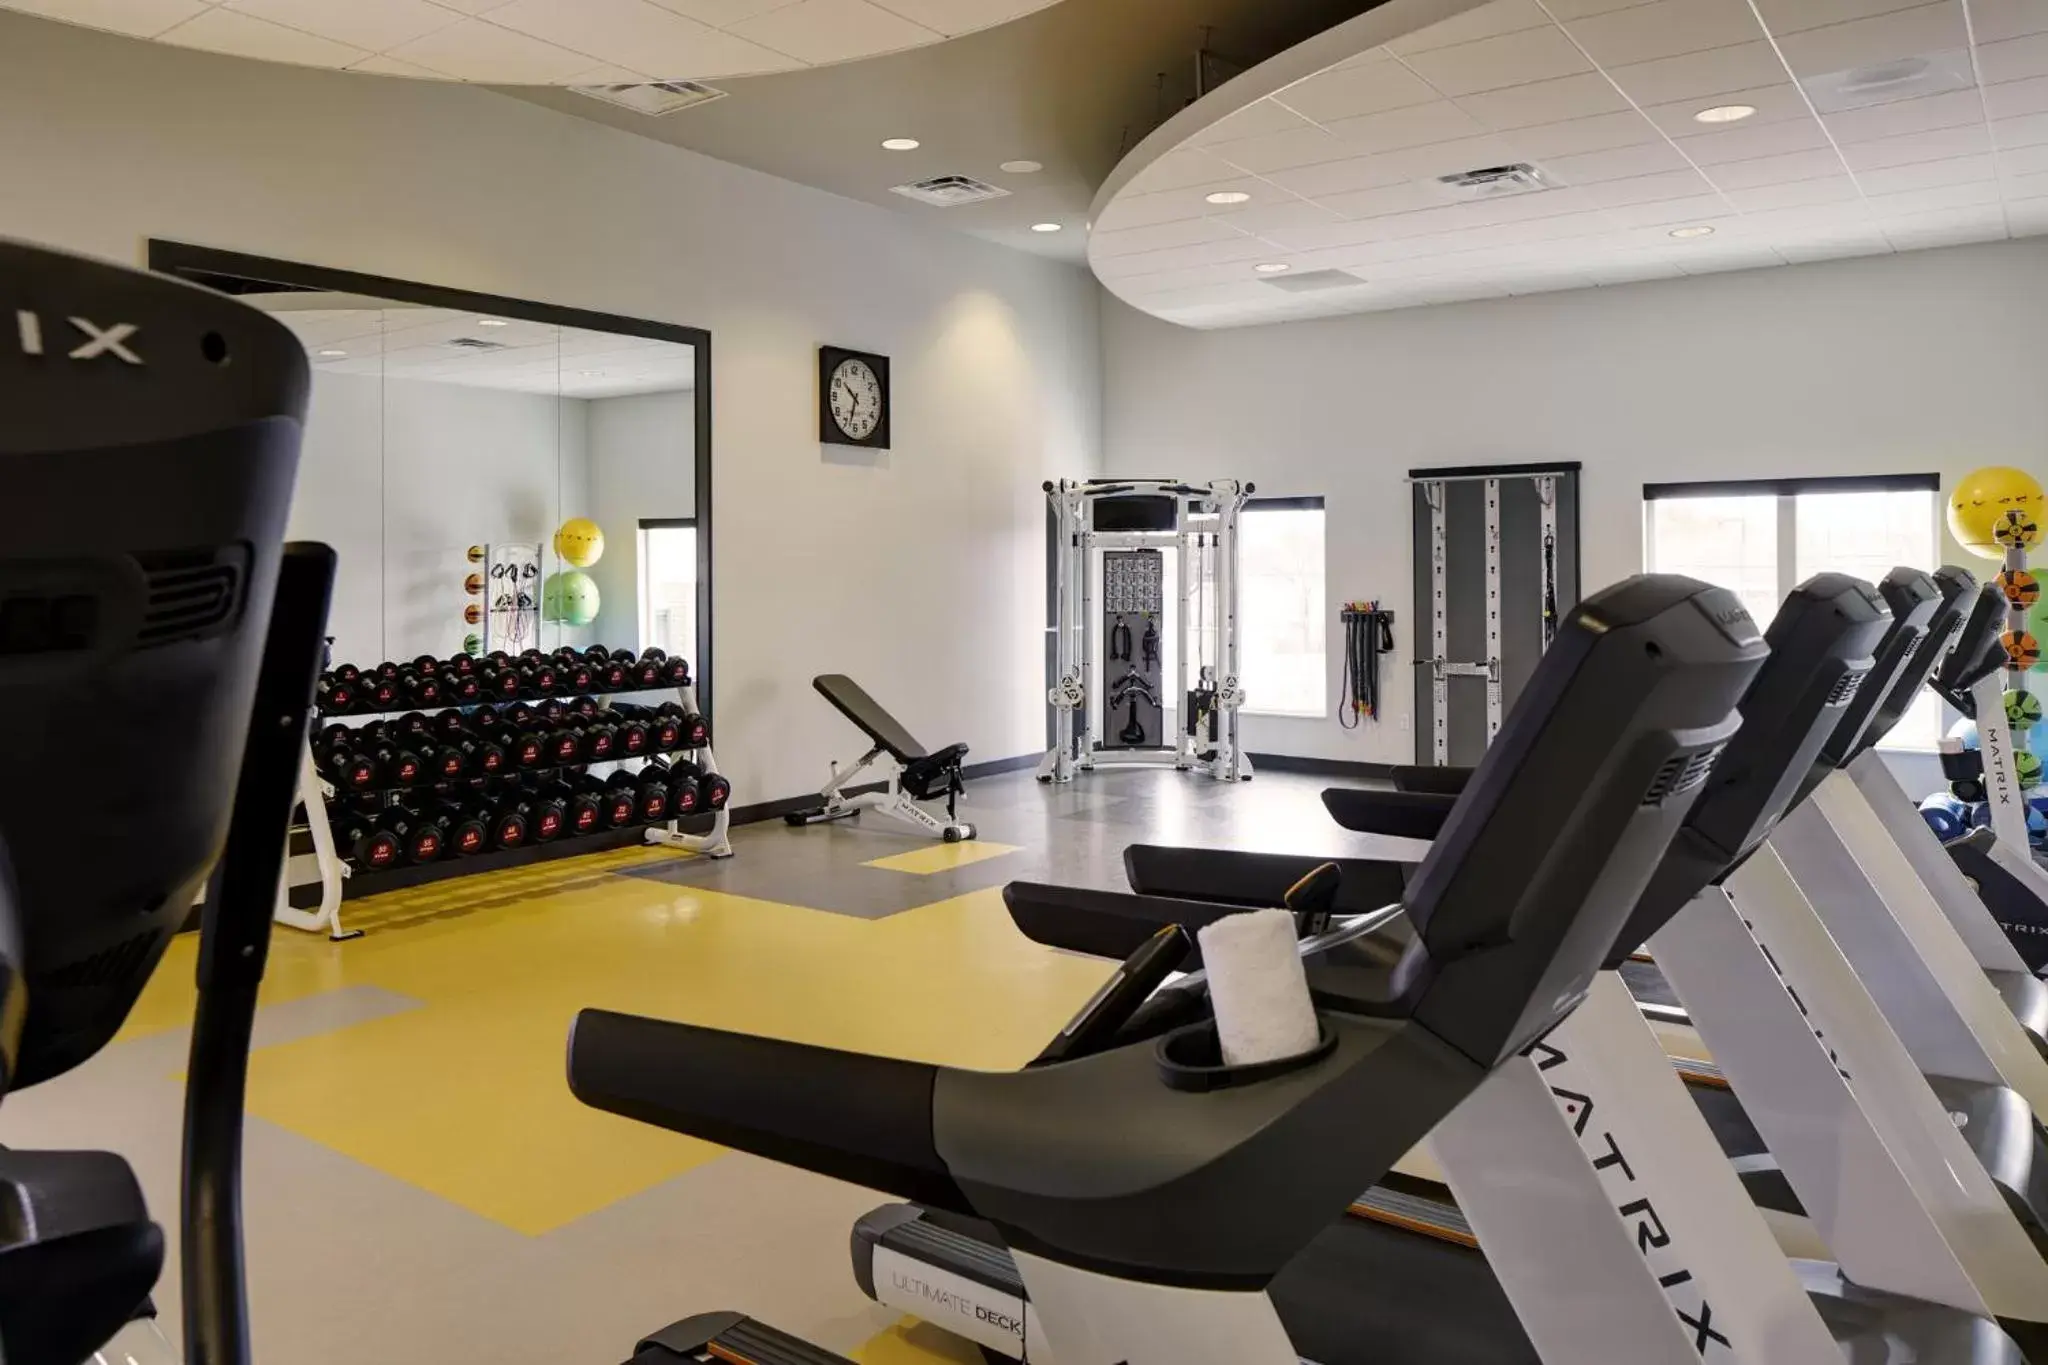 Fitness centre/facilities, Fitness Center/Facilities in Archer Hotel Boston/Burlington